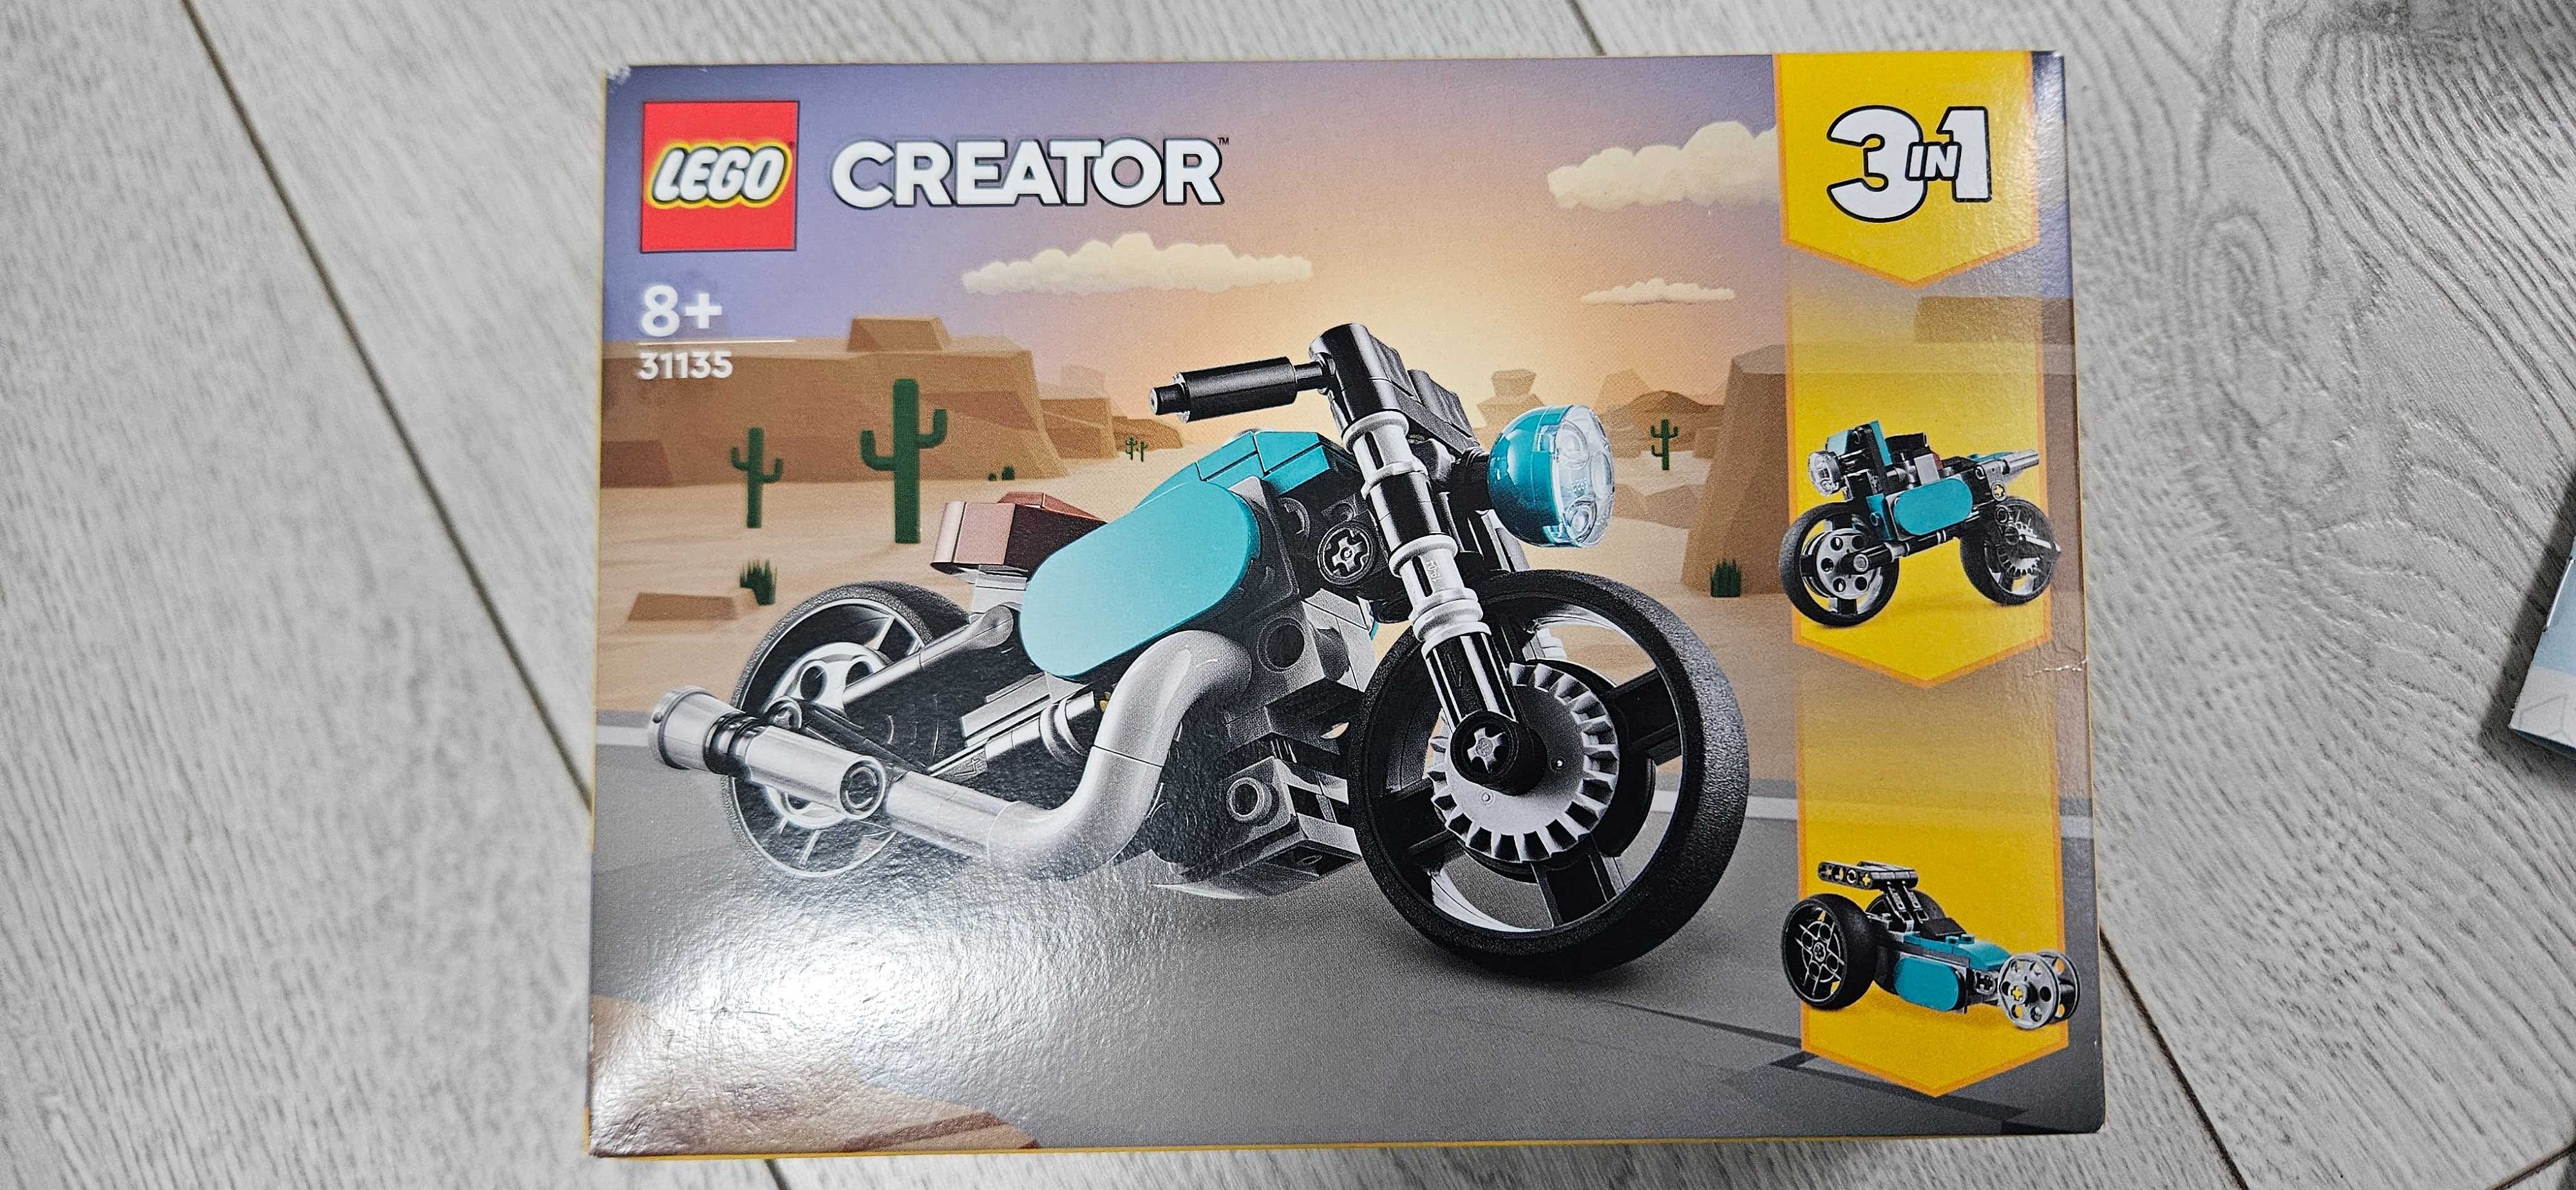 LEGO 31135 Creator 3:1  Motocicleta vintage 31135,  128 piese, complet